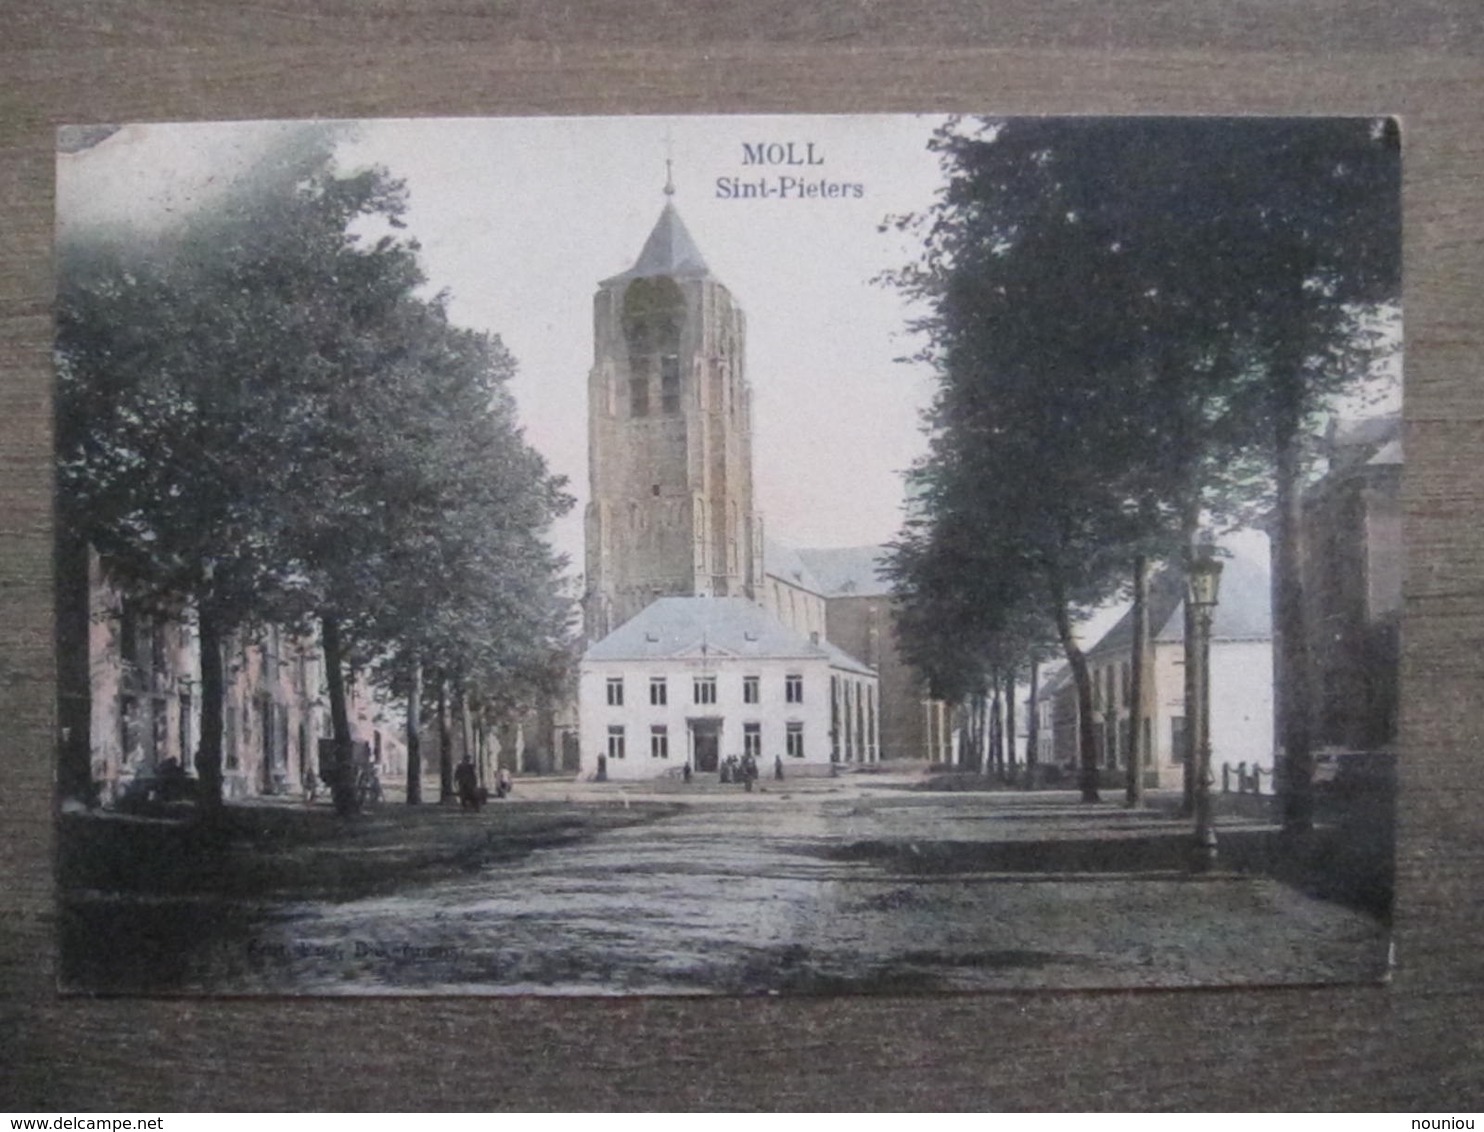 Cpa Moll Mol - Sint-Pieters - Place église - Calèches - 1908 - Marco Marcovici - Mol